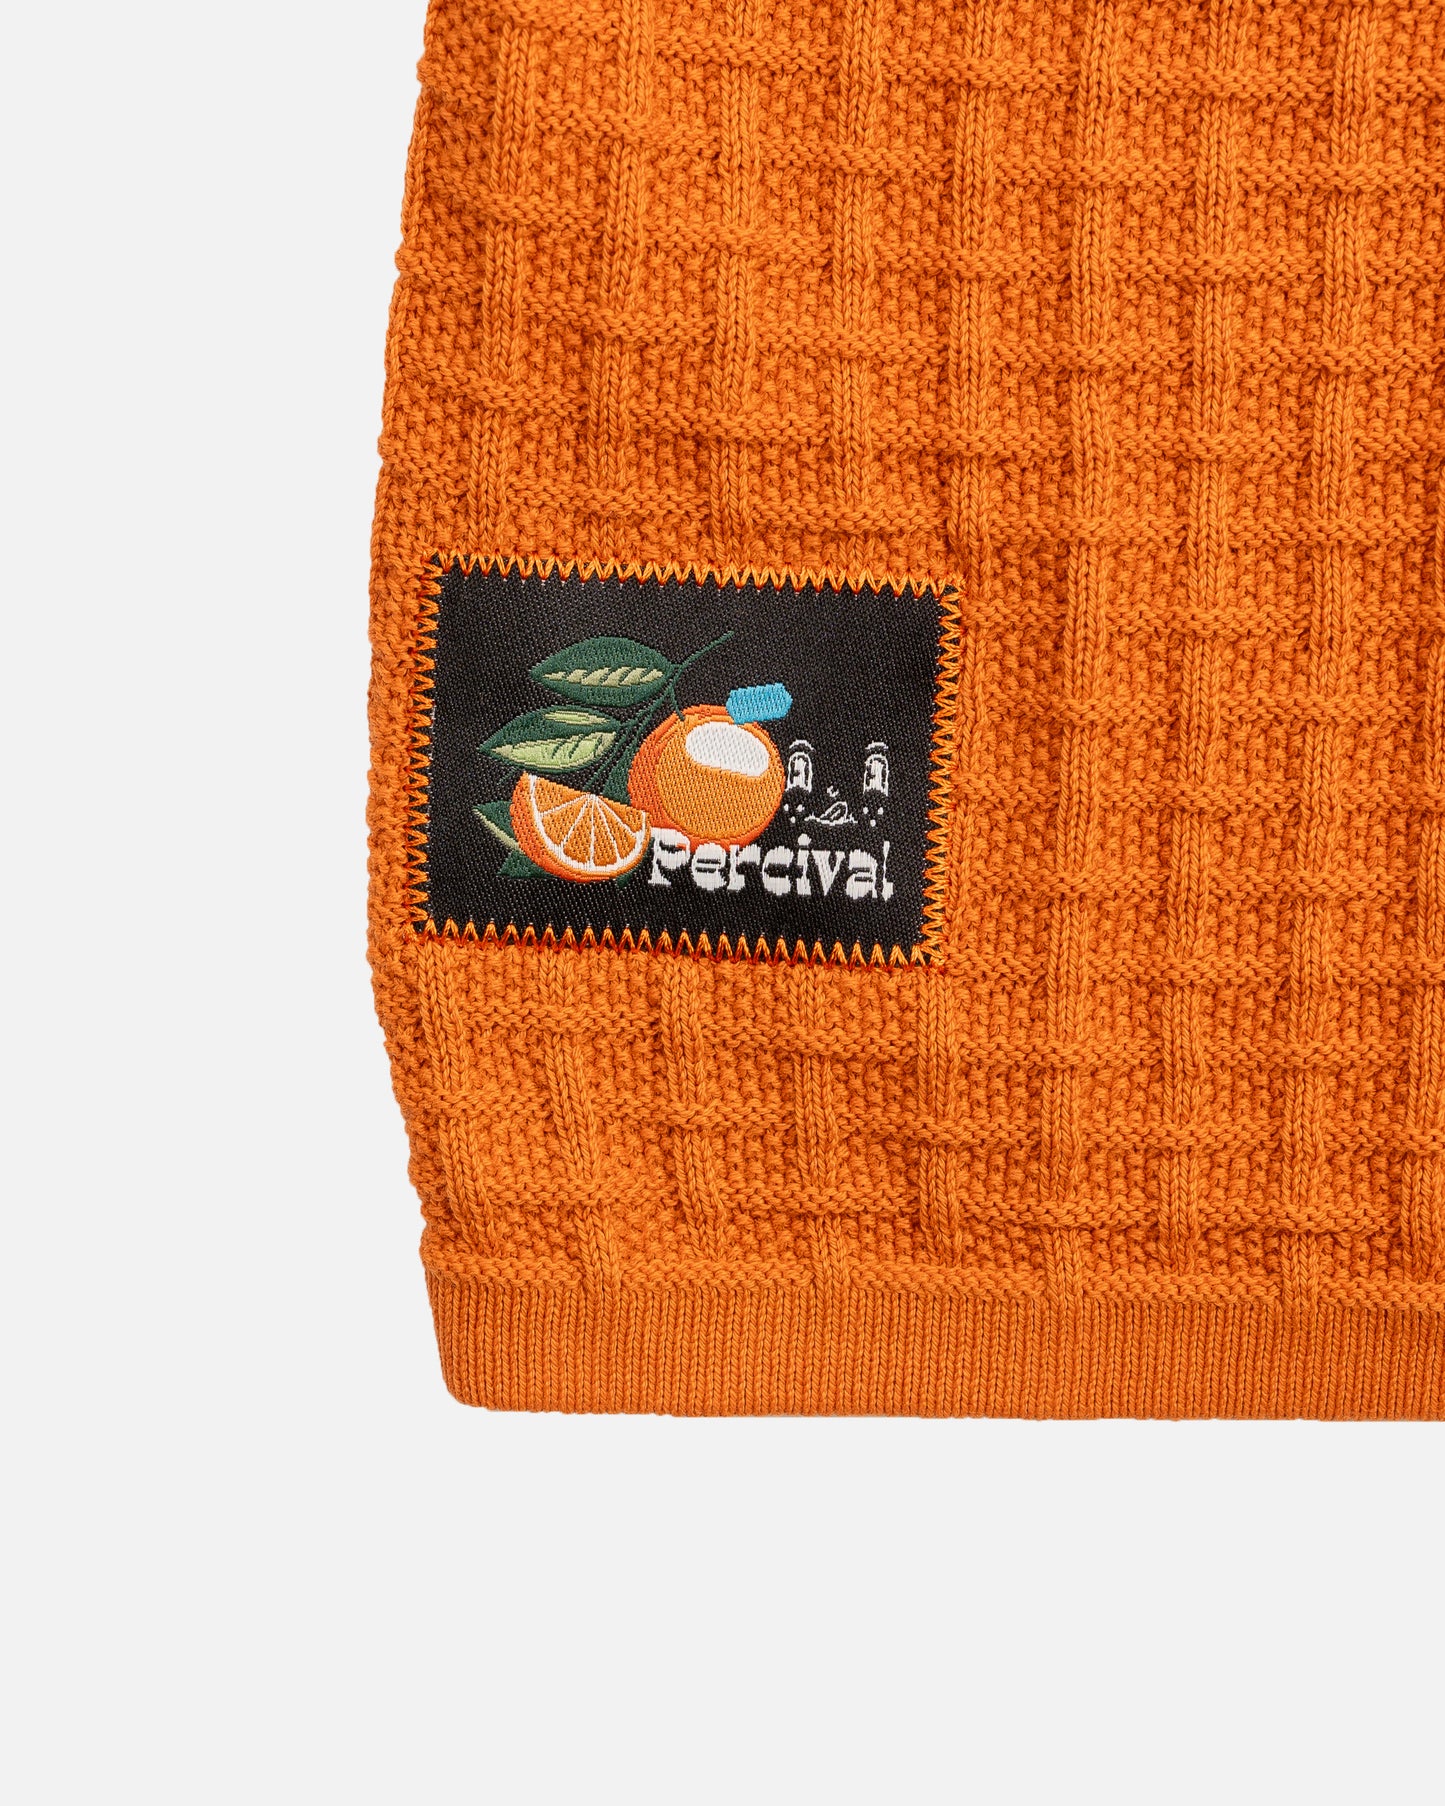 Percival Dip Dab Knitted Shirt Orange